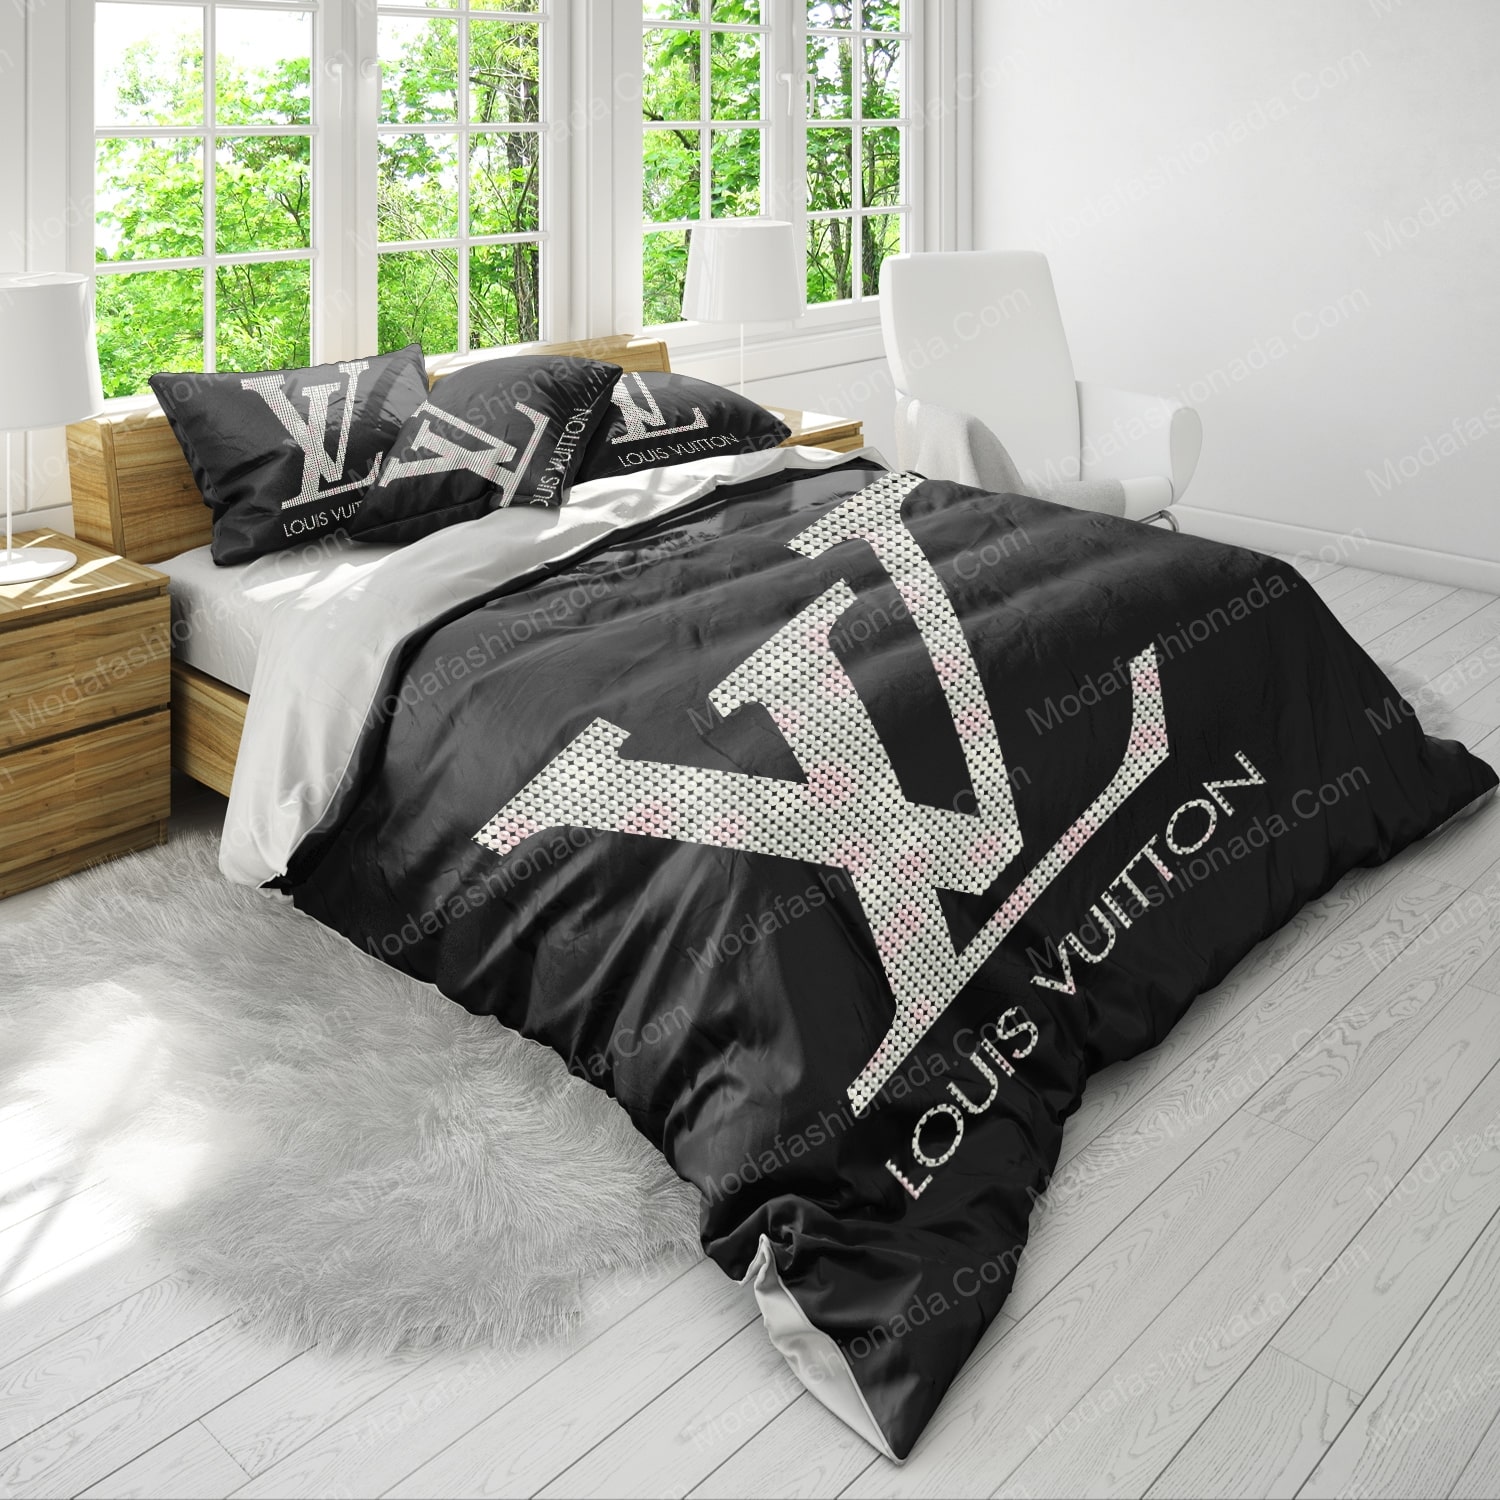 Louis-Vuitton-Bedding-Set - lv-13, Louis vuitton bedding se…